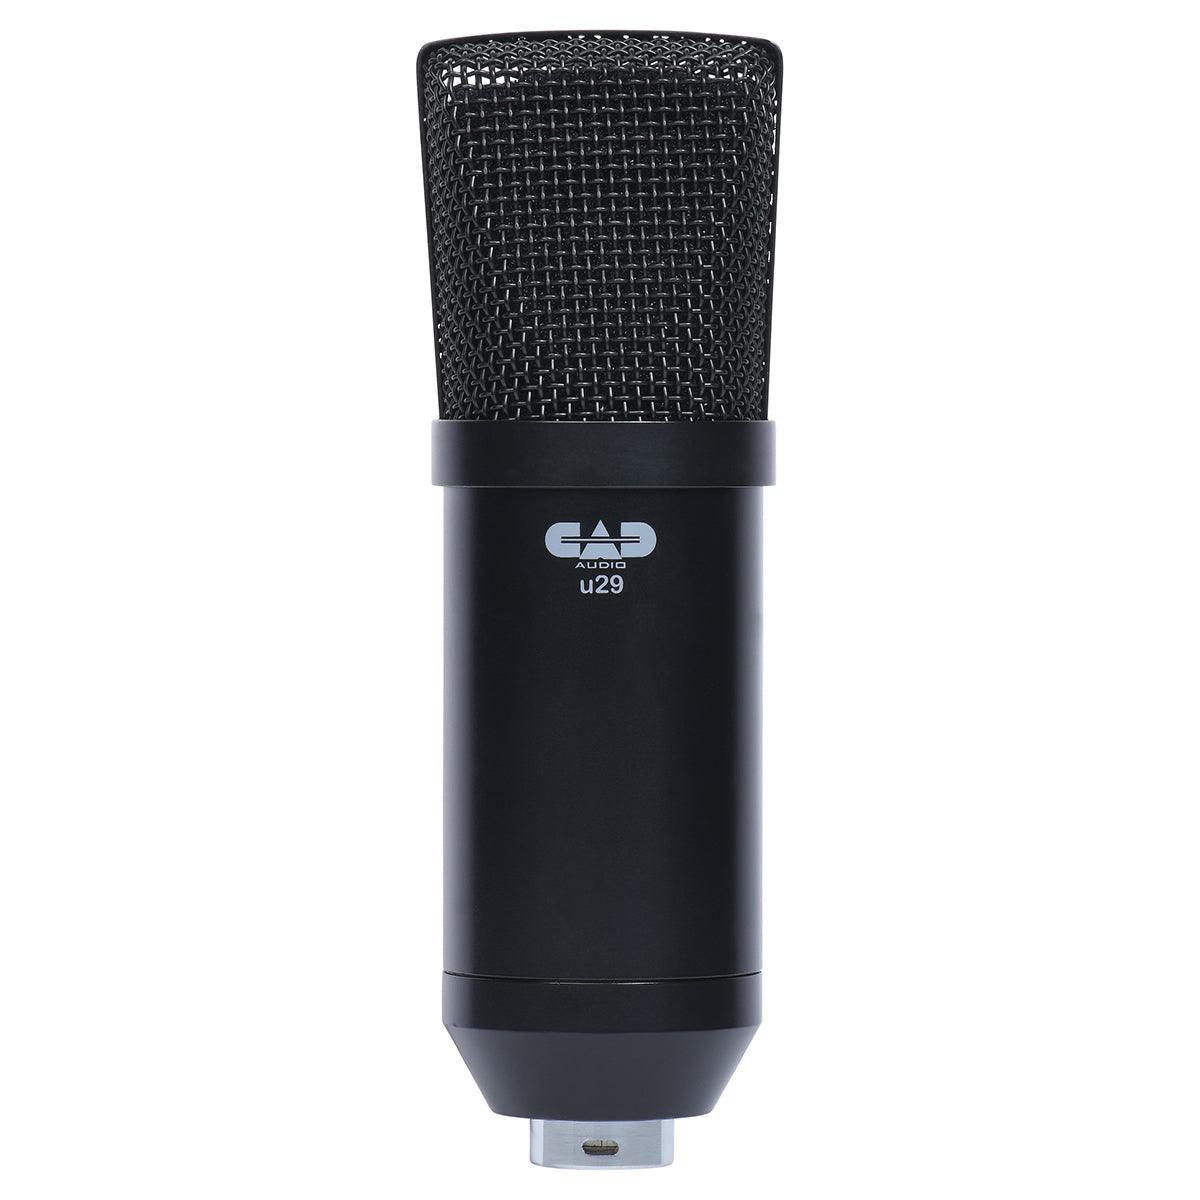 CAD USB Studio Microphone Kit - DY Pro Audio